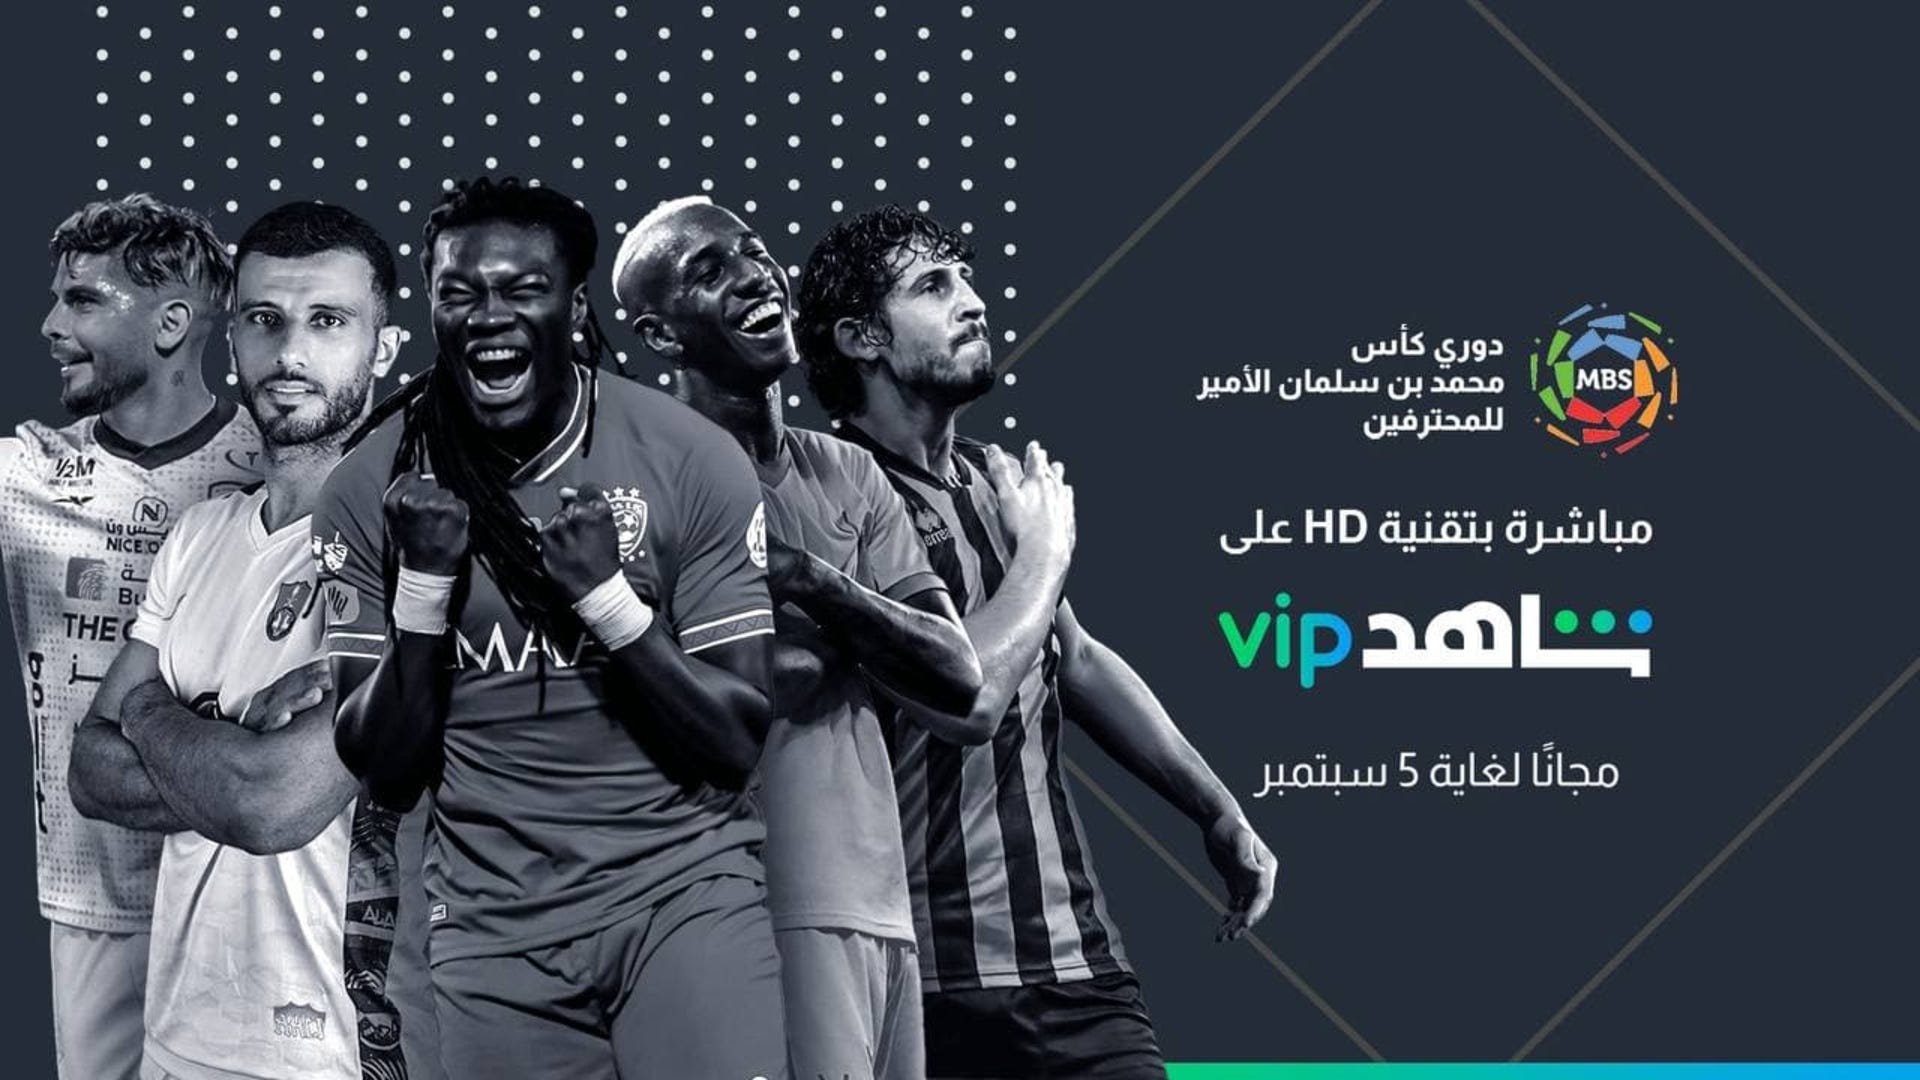 MBS League Shahid Promo دوري كأس الأمير محمد بن سلمان للمحترفين السعودي على شاهد